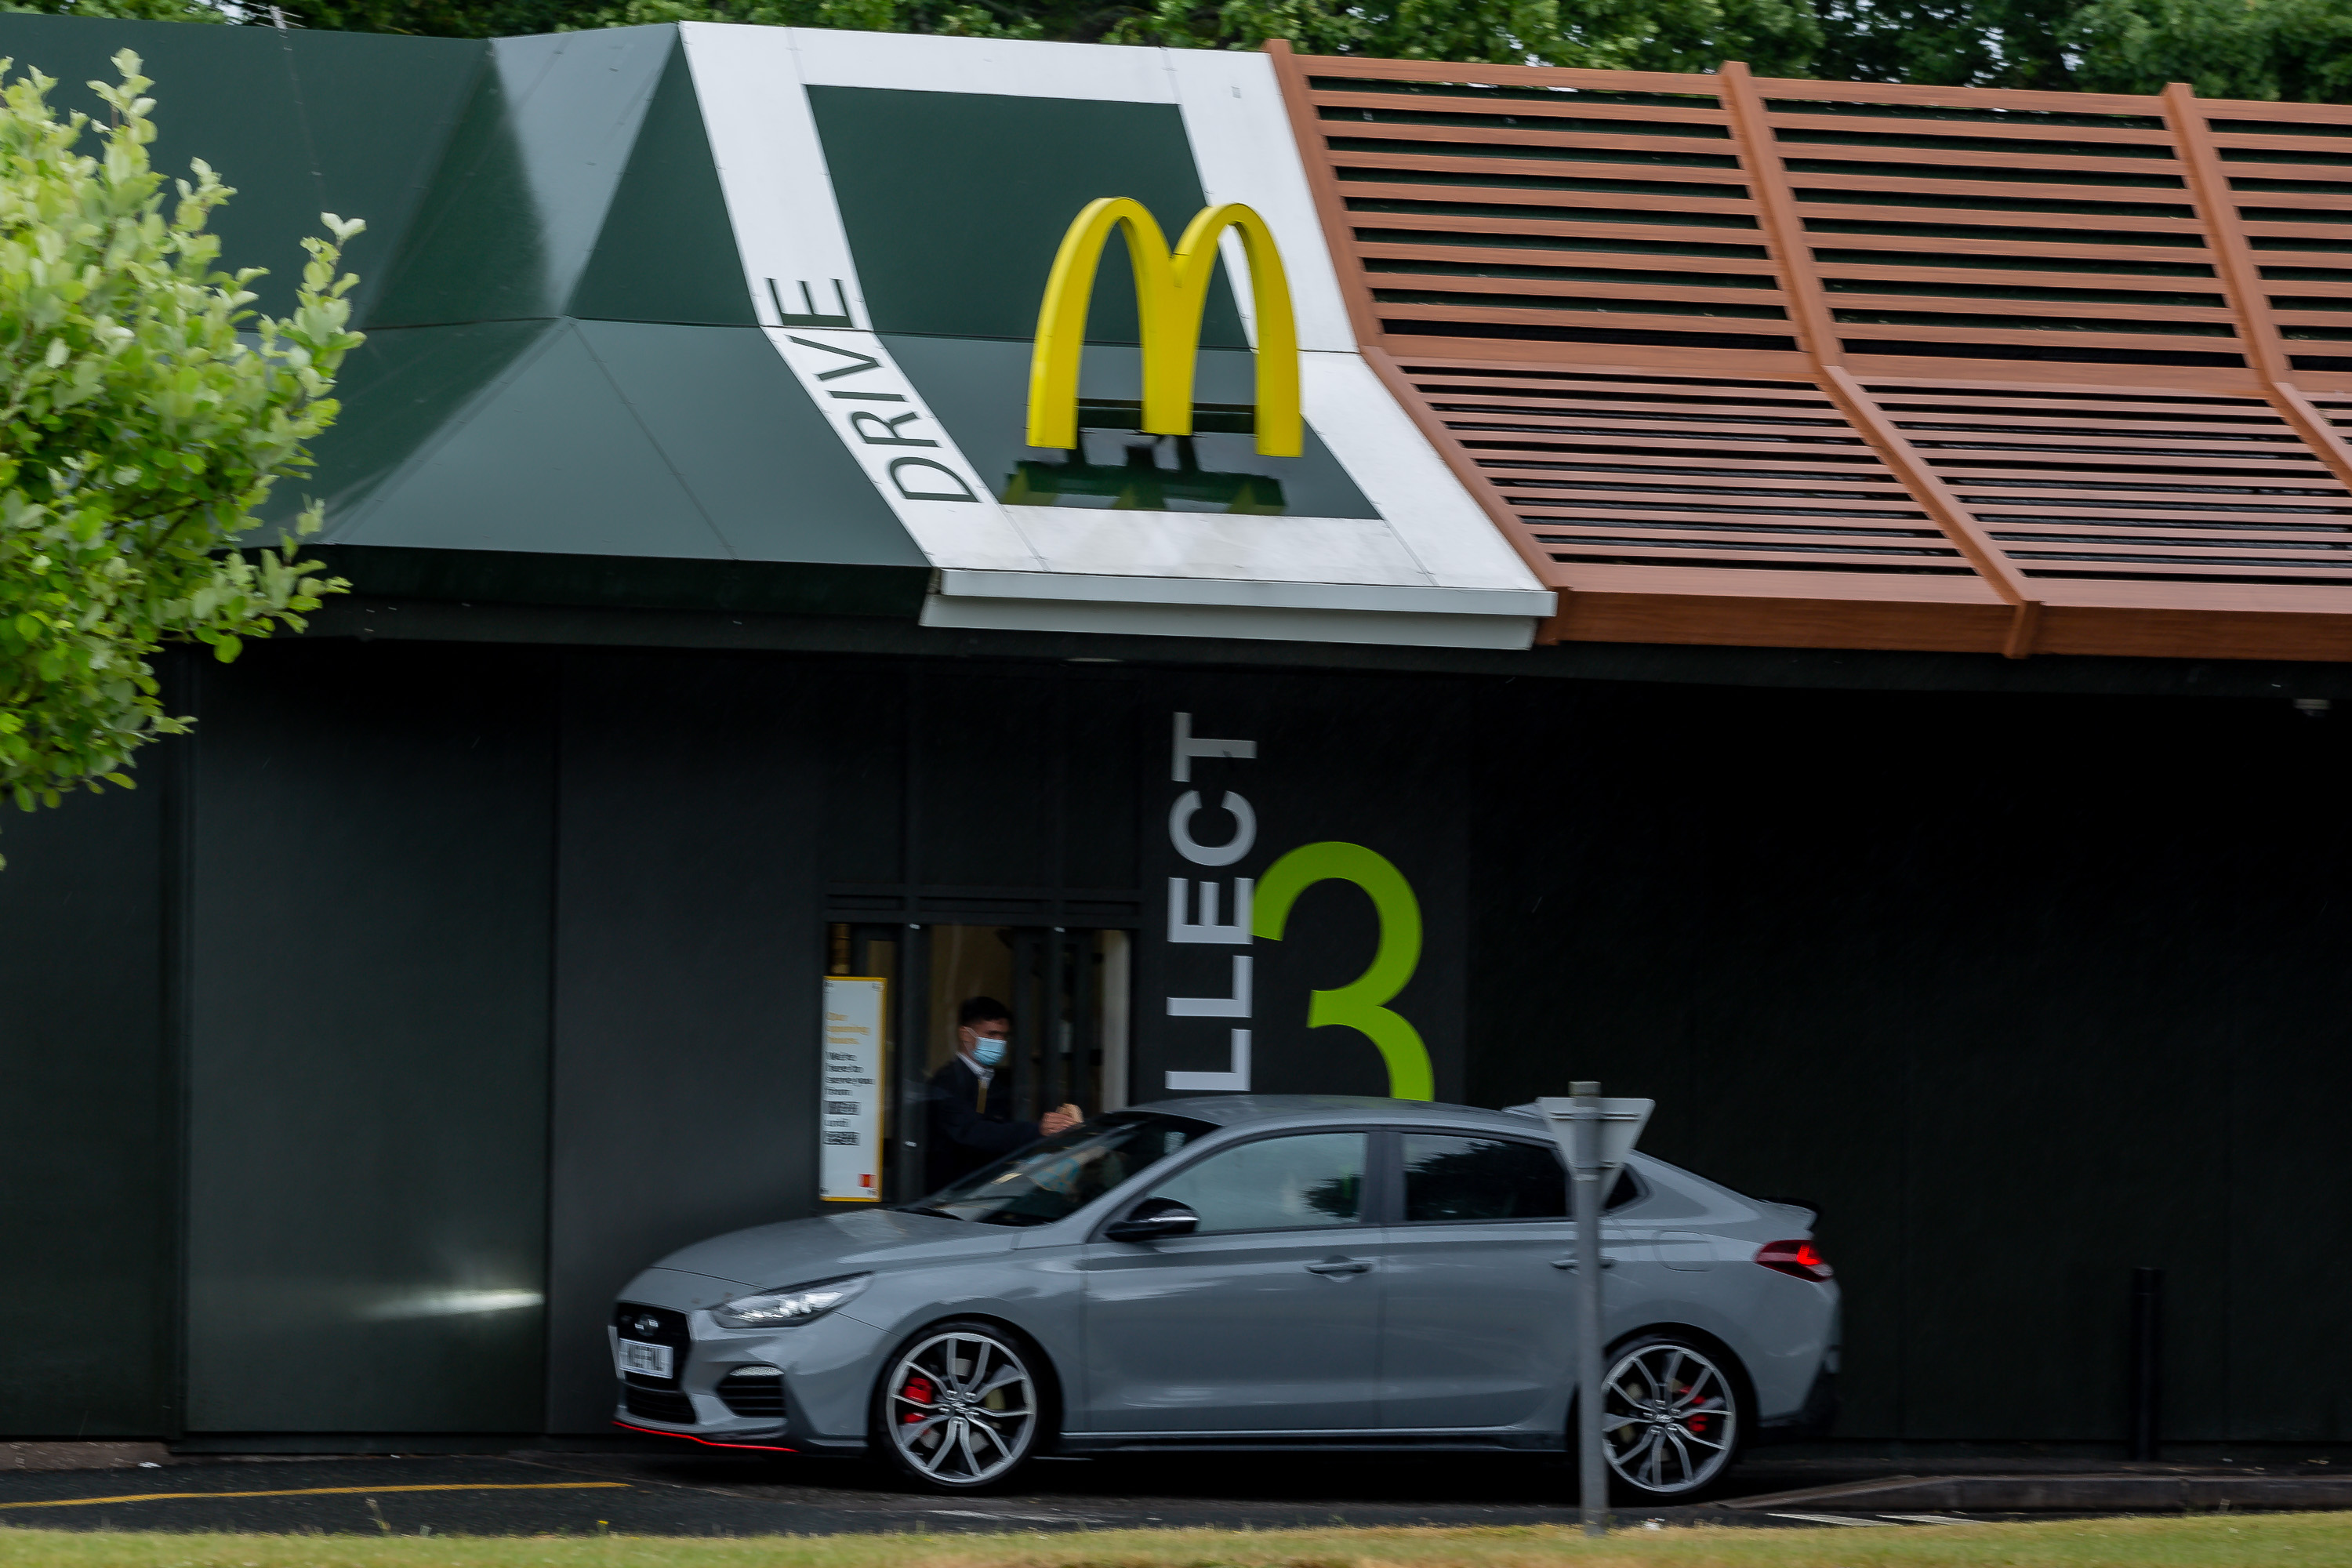 McDonalds reopens